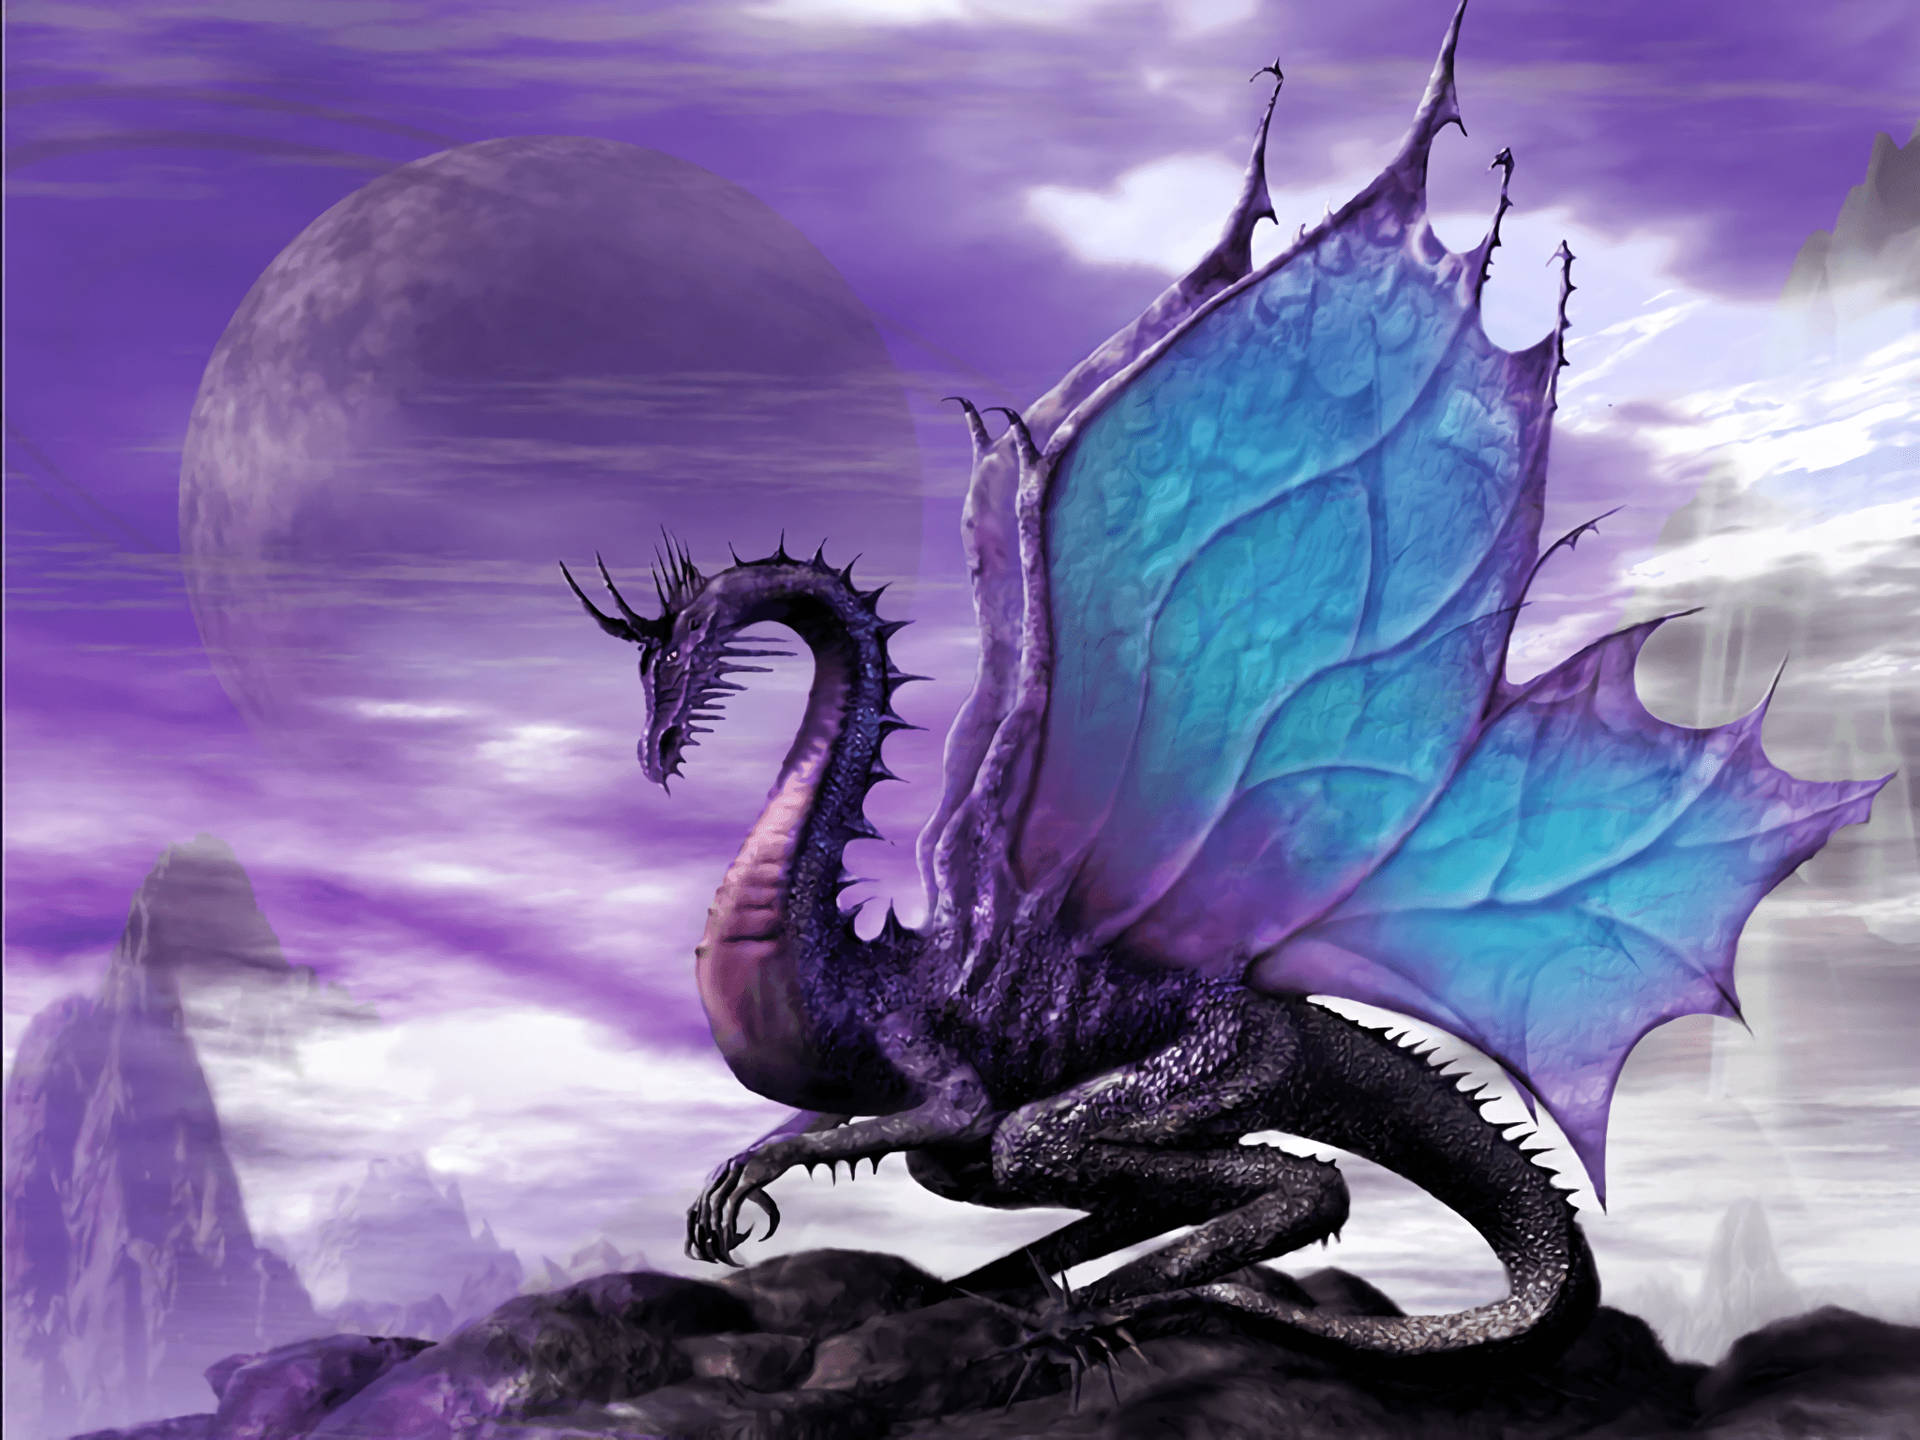 A Mystical Galaxy Dragon Poses Amidst a Vast Purple Nebula Wallpaper